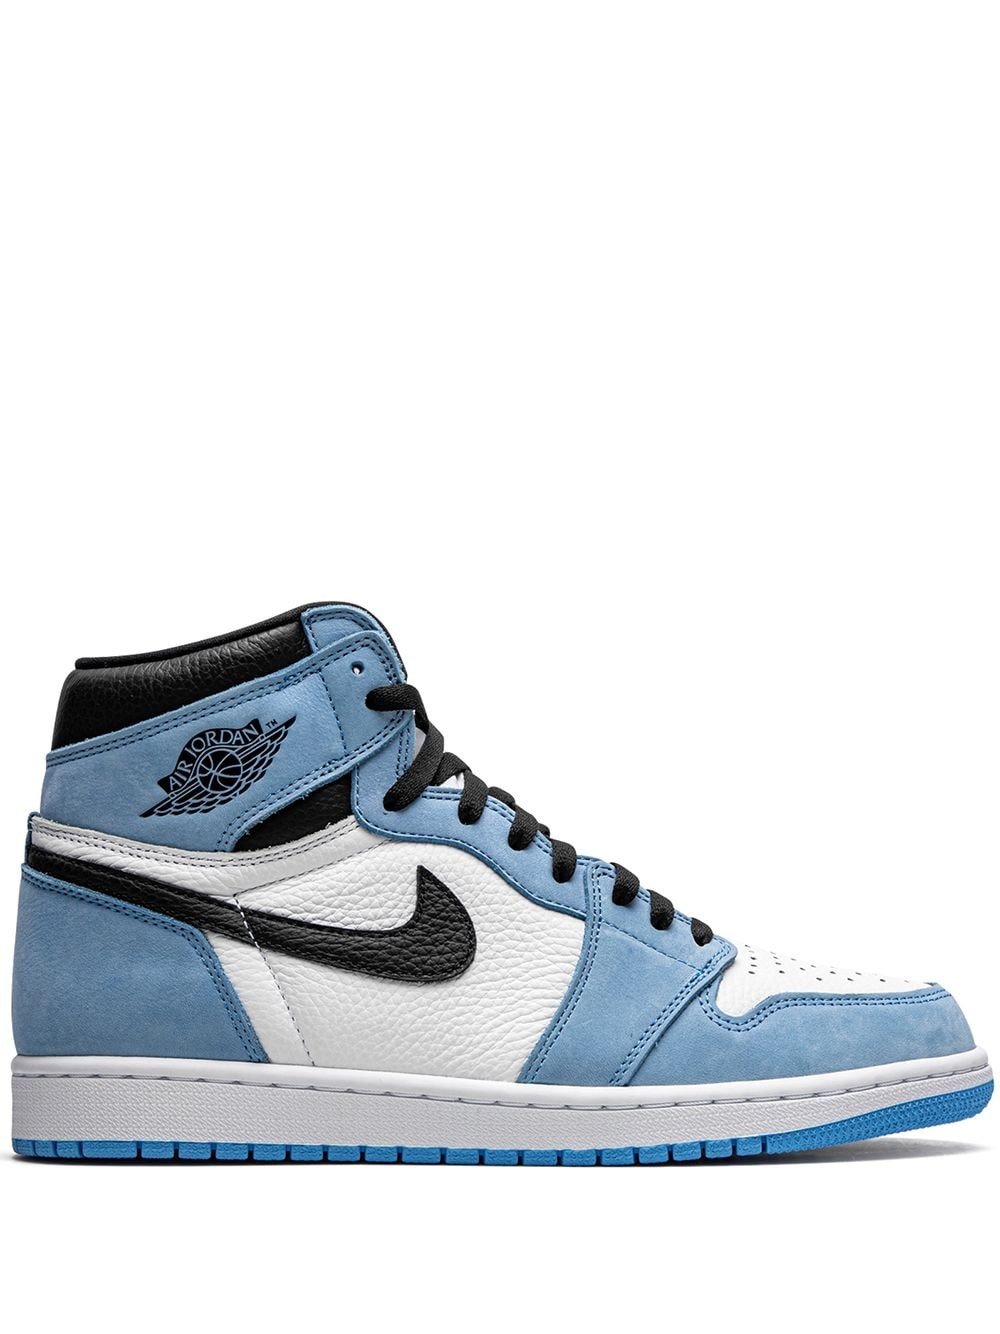 Nike Jordan Air Jordan 1 Retro High University Blue Sneakers 555088134  WHITE/UNIVERSITY BLUE-BLACK - Ariano Boutique - Luxury and Elegant Online  Shop